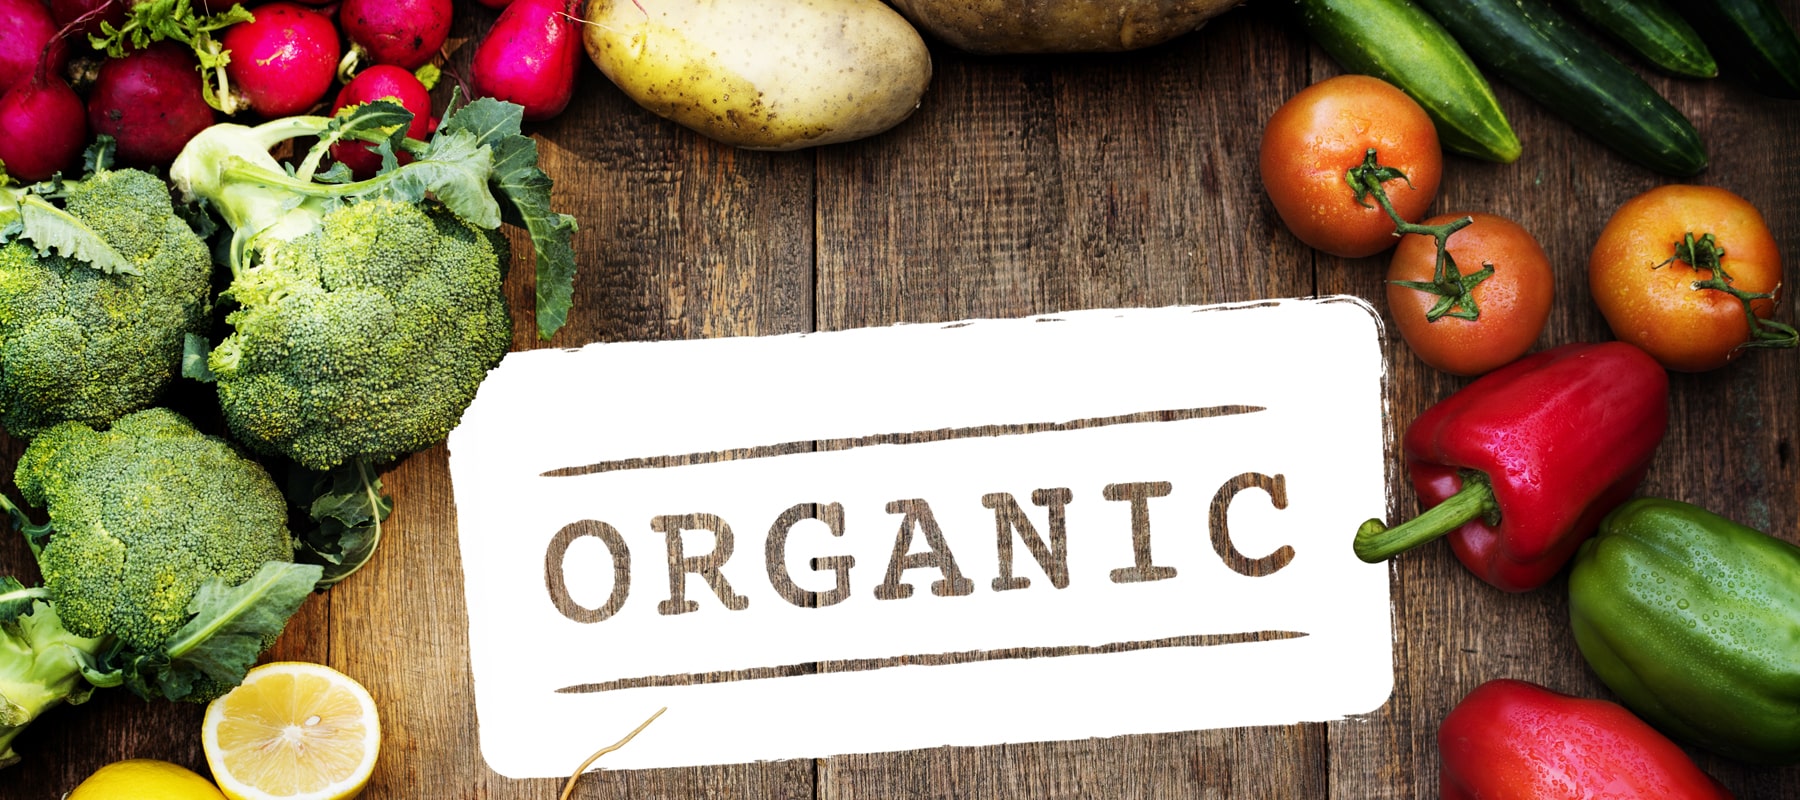 Why we love organic produce